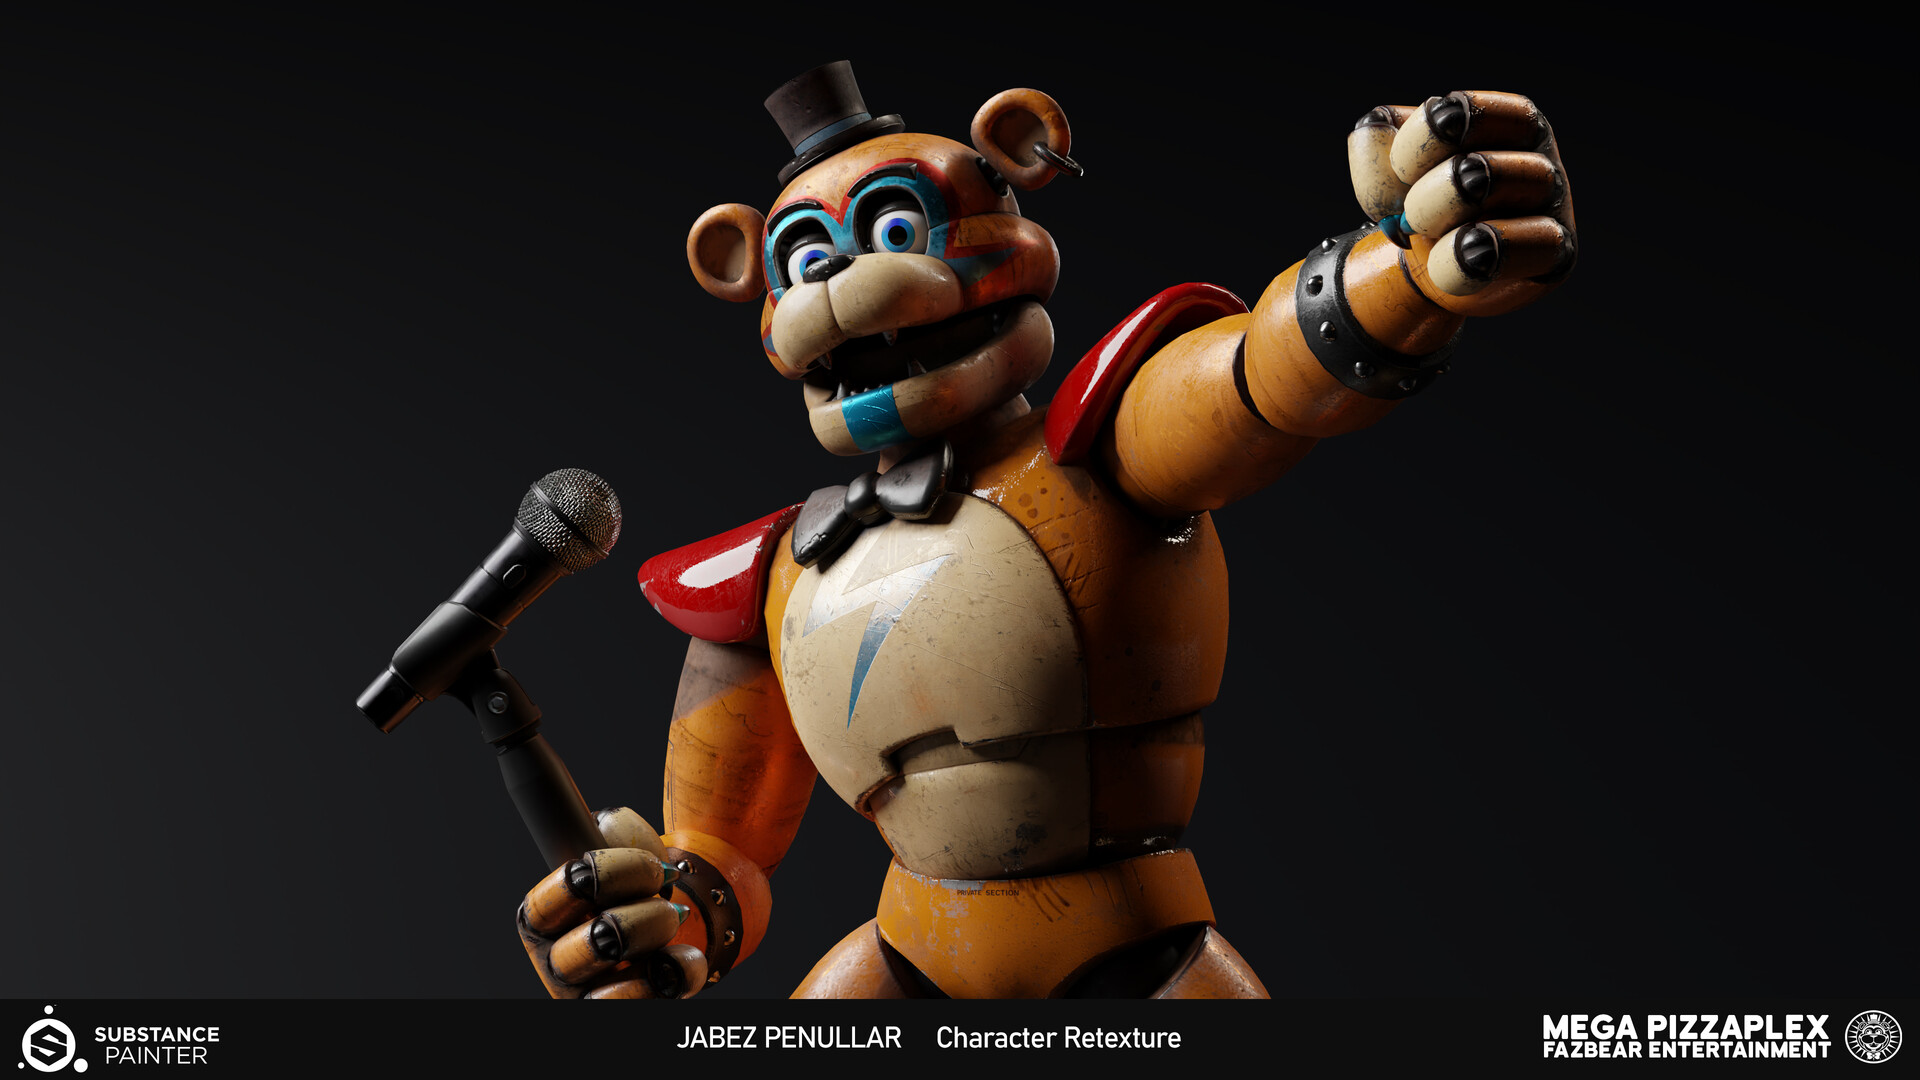 GlamRock Freddy / Five Nights at Freddy´s, 3D models download